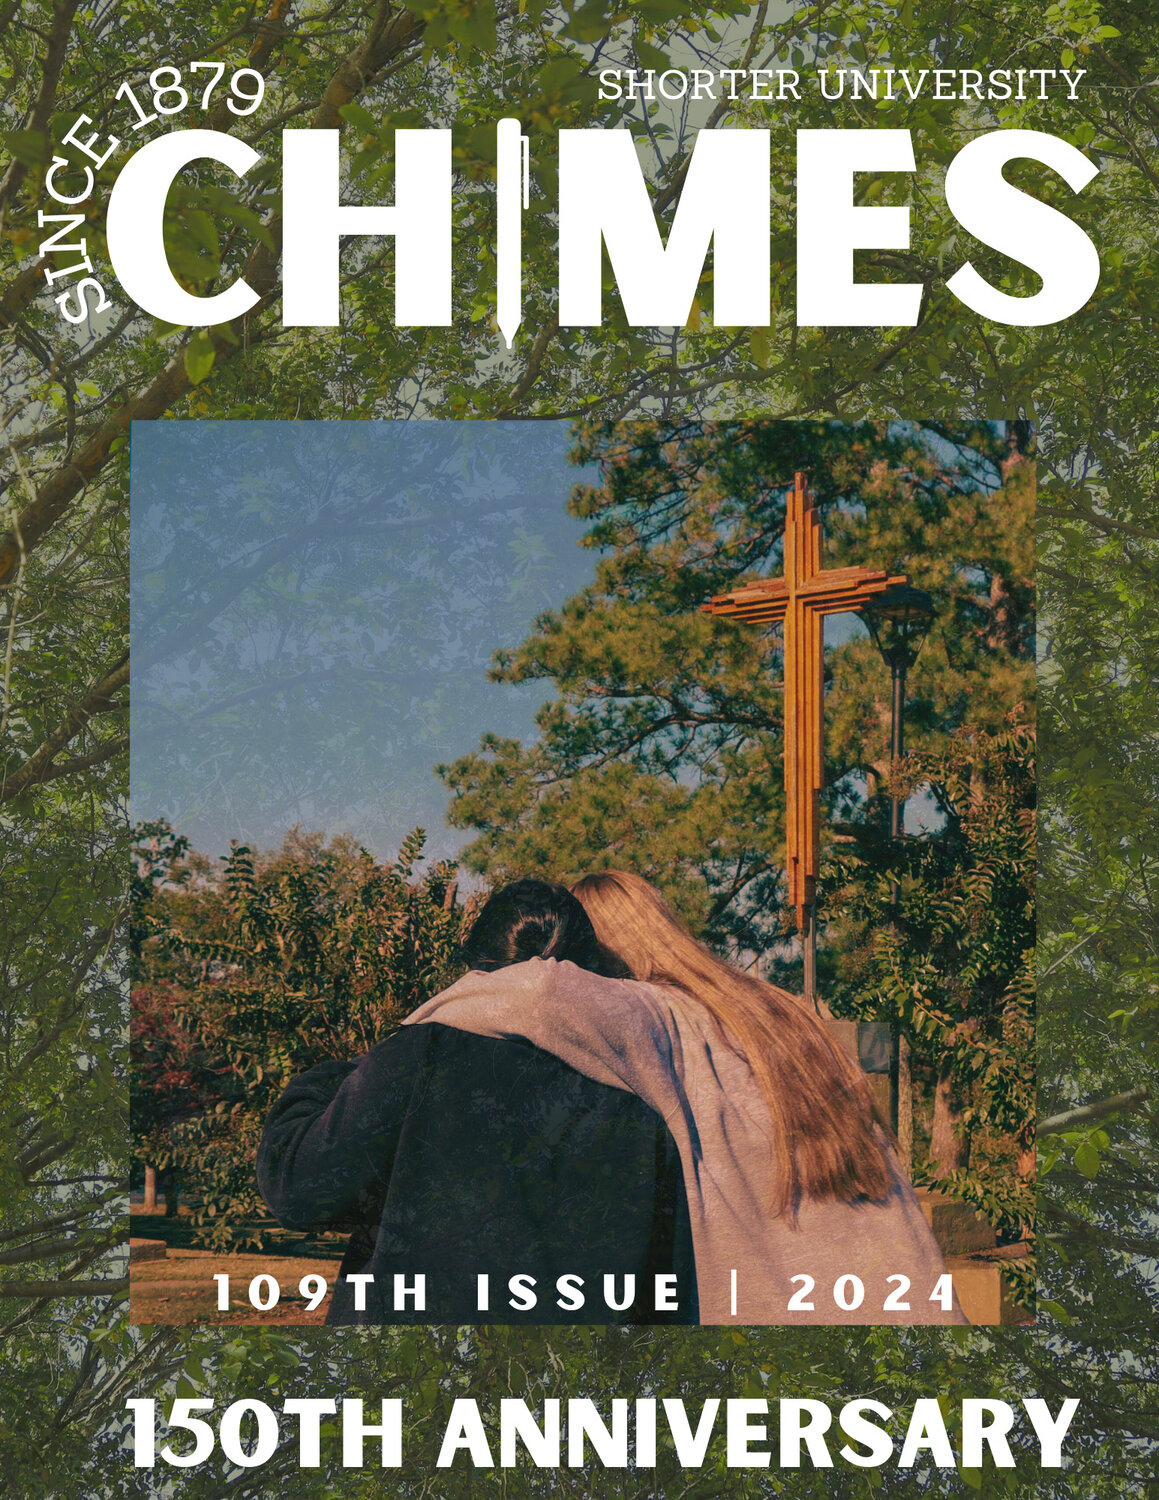 The 109th issue of Chimes magazine. (Photo/Shorter University)